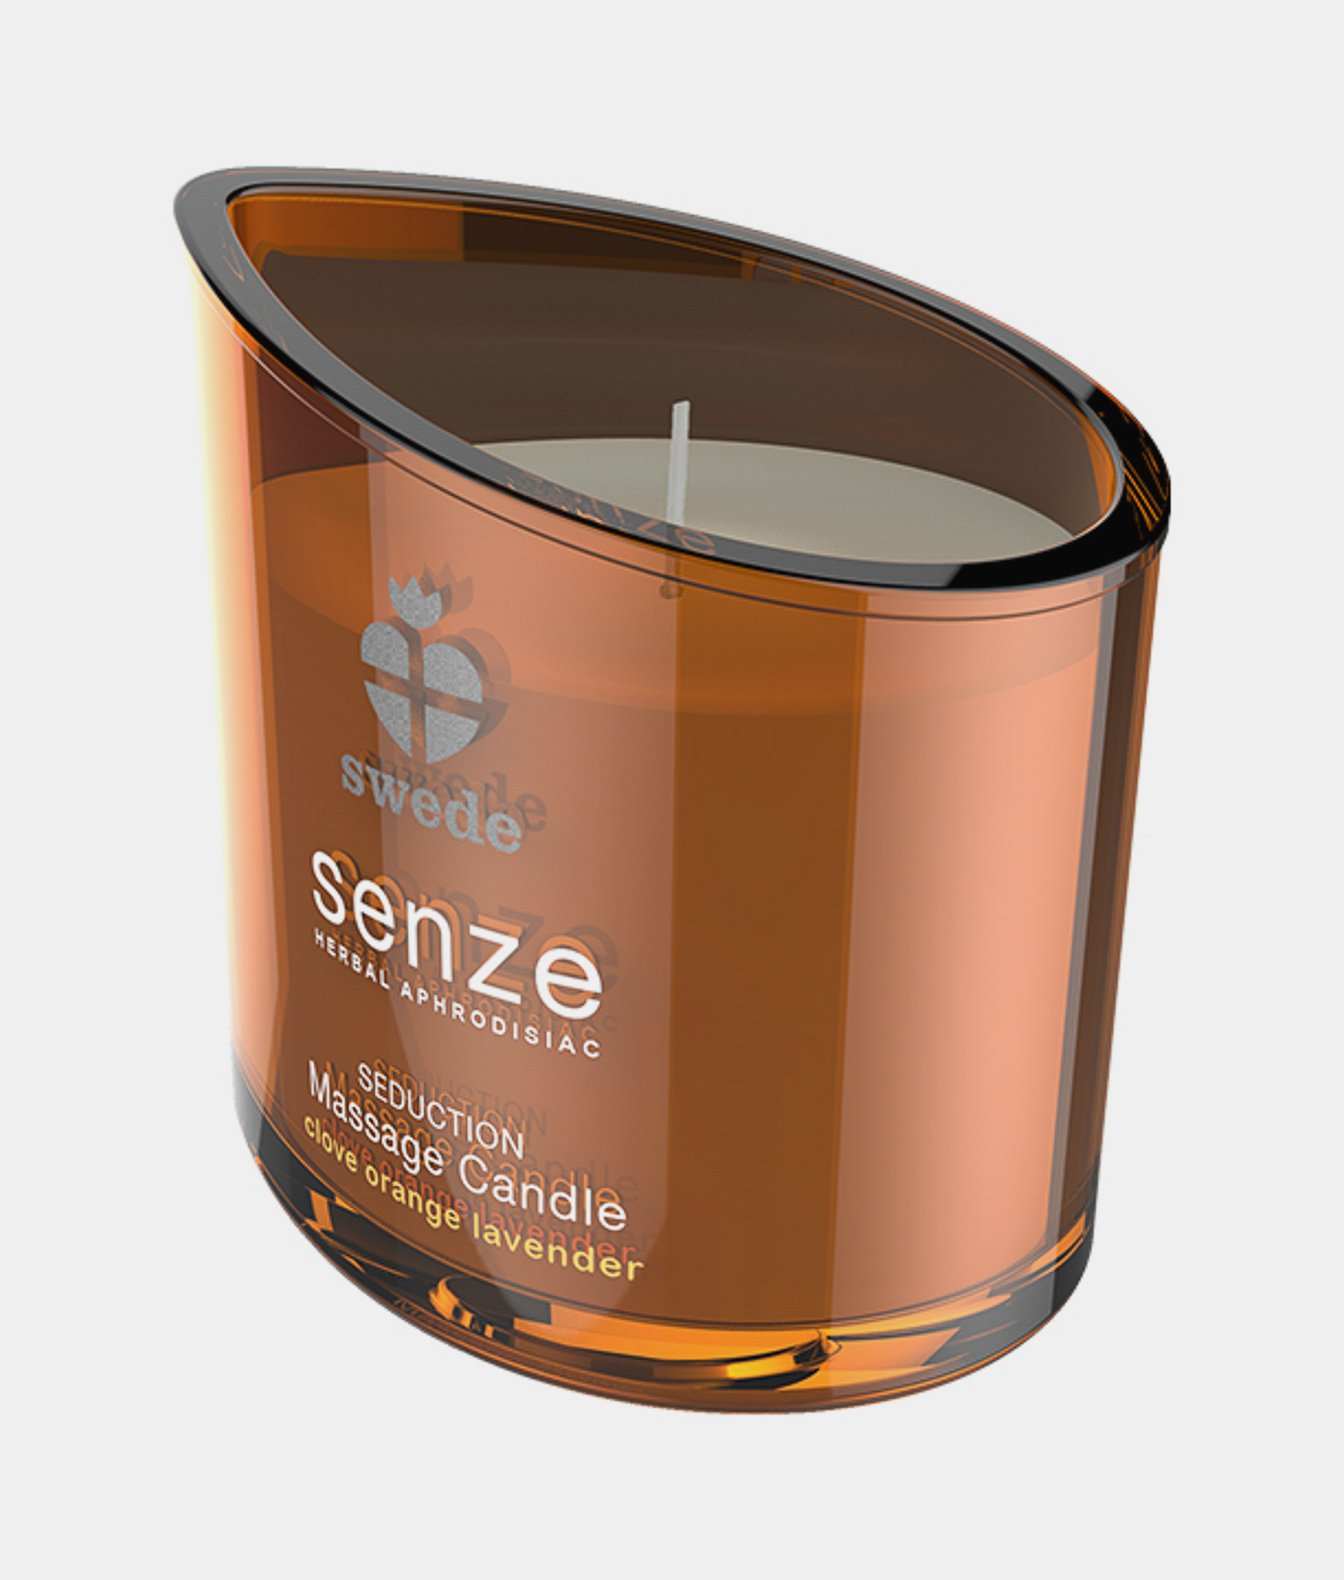 Swede- Senze Seduction Massage Candle Clove Orange Lavender świeca do masażu